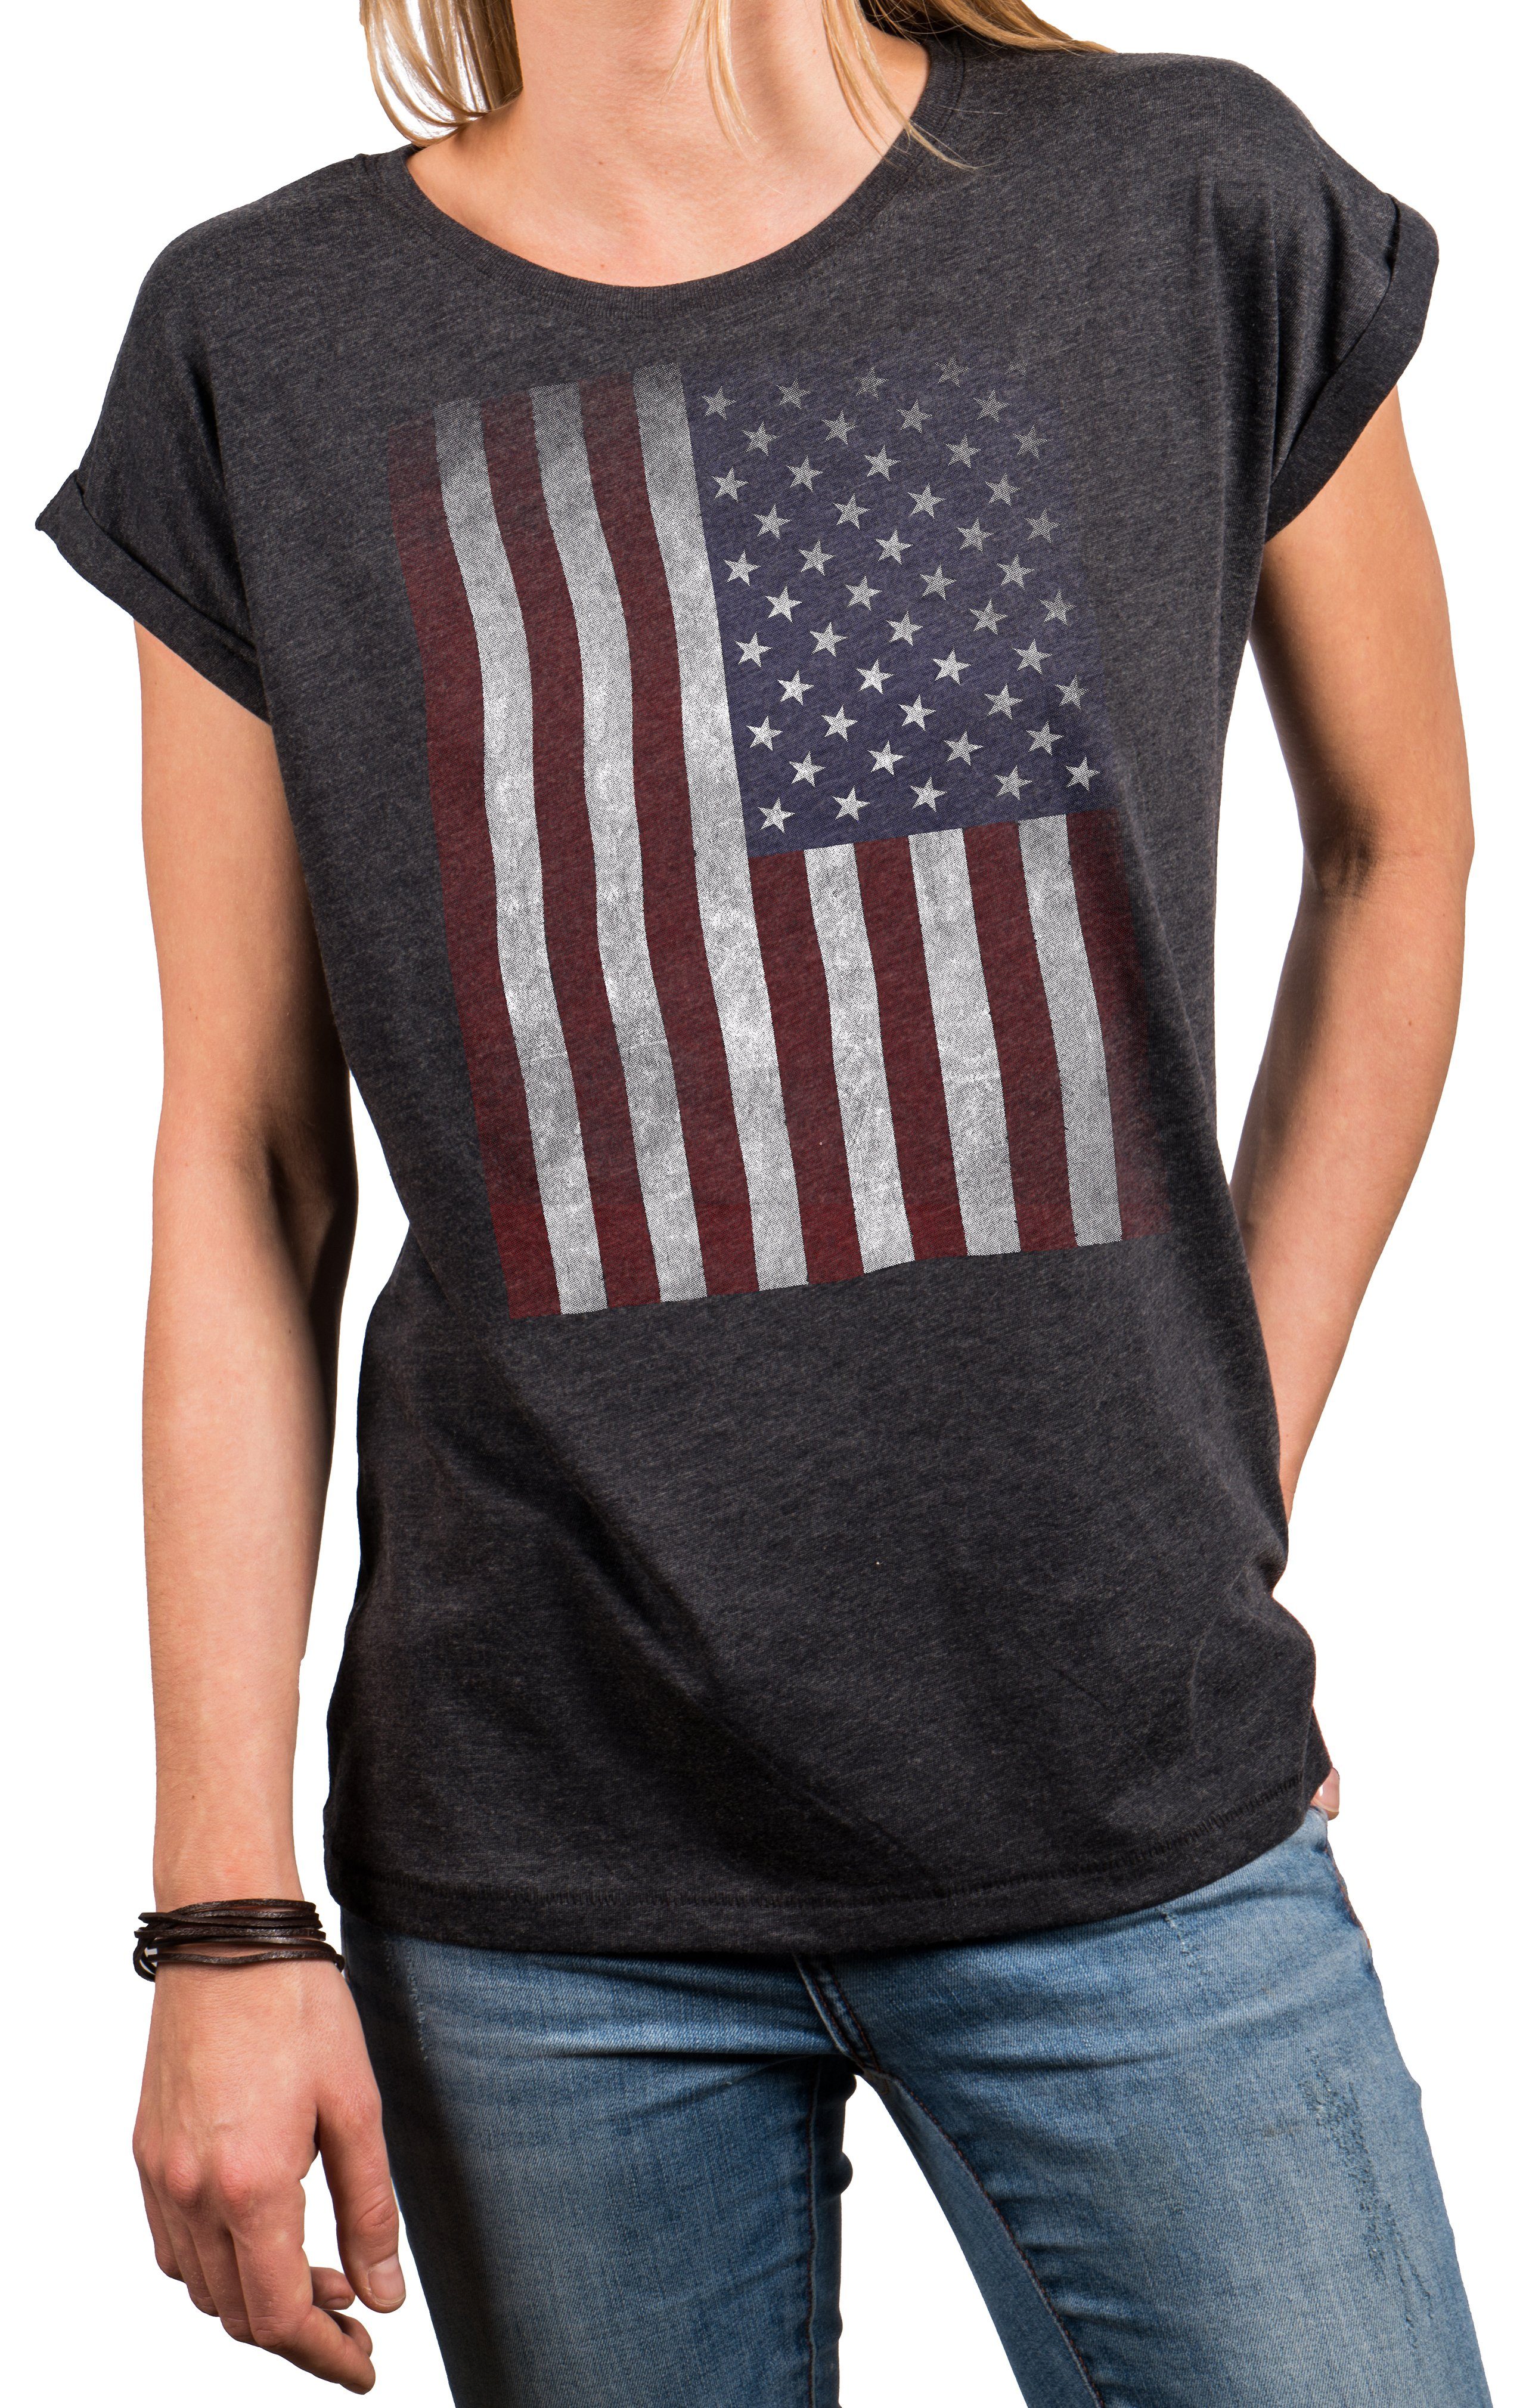 MAKAYA Print-Shirt Damen USA Flagge blau) Amerika Sommer Größen Fahne (Kurzarm, große Tunika Top schwarz, Baumwolle, grau, Oberteile Vintage